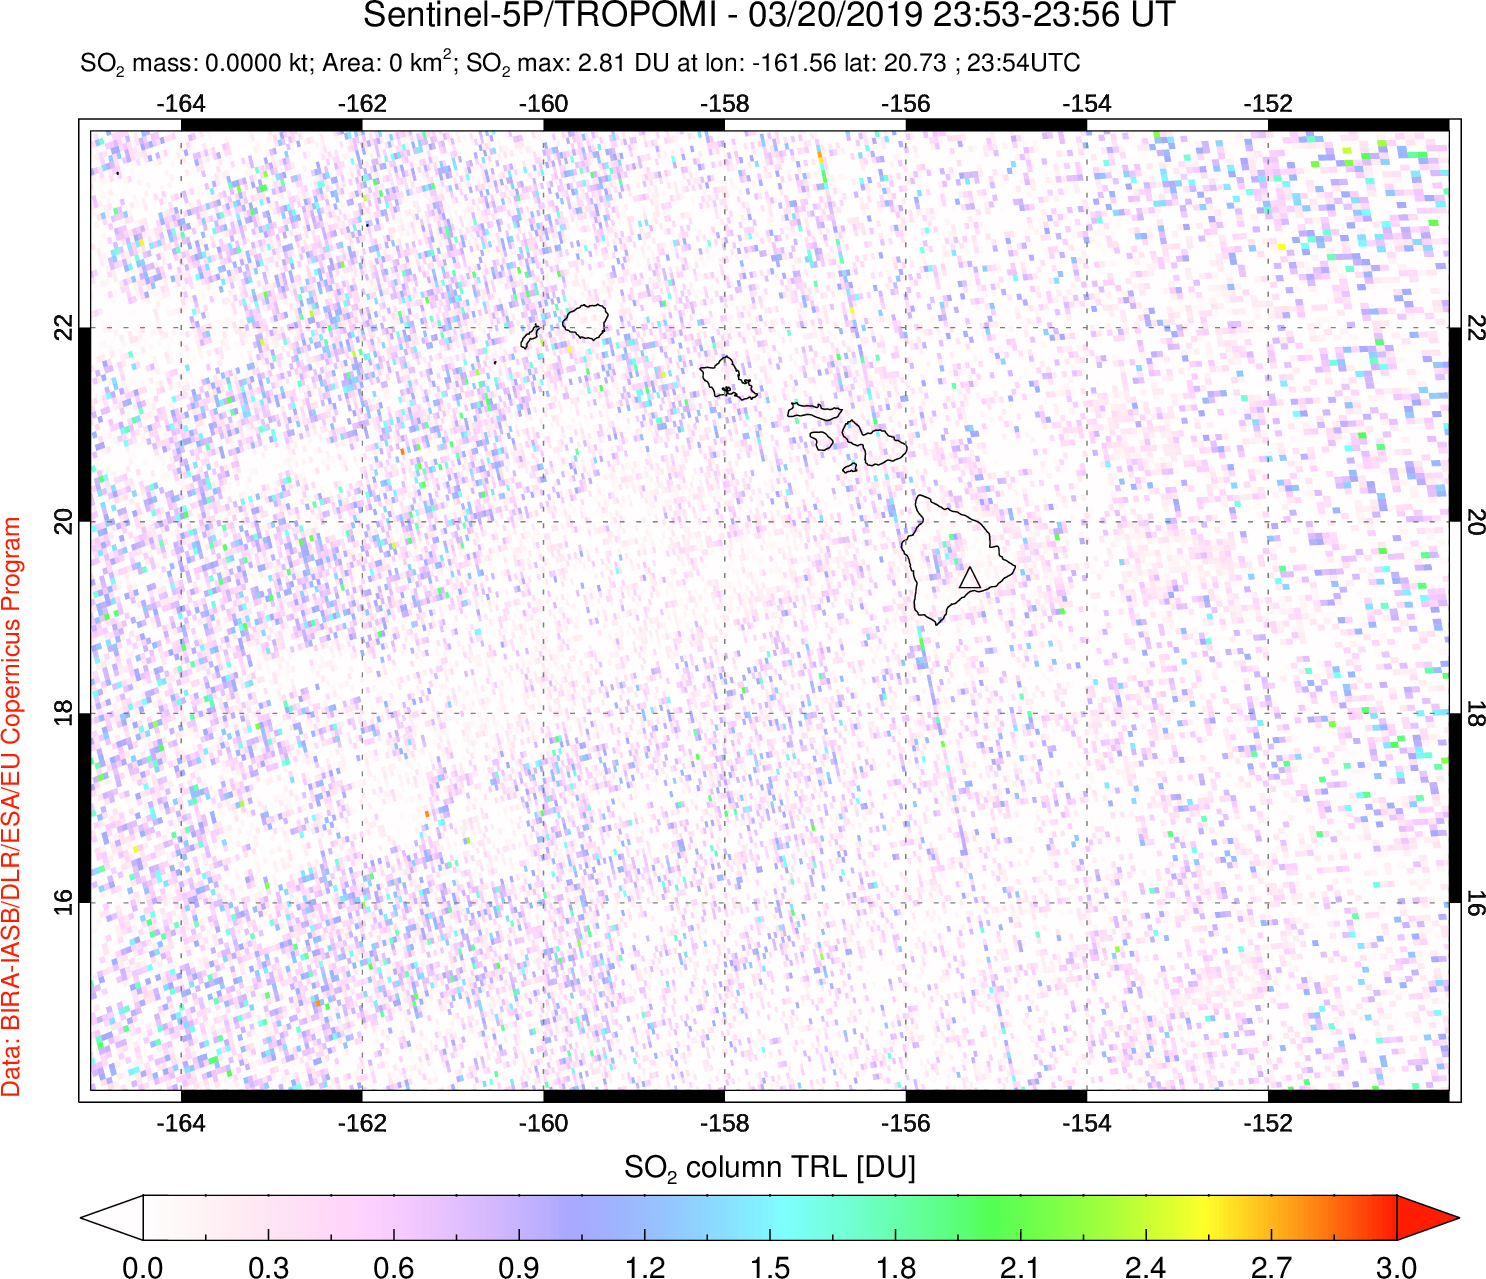 A sulfur dioxide image over Hawaii, USA on Mar 20, 2019.